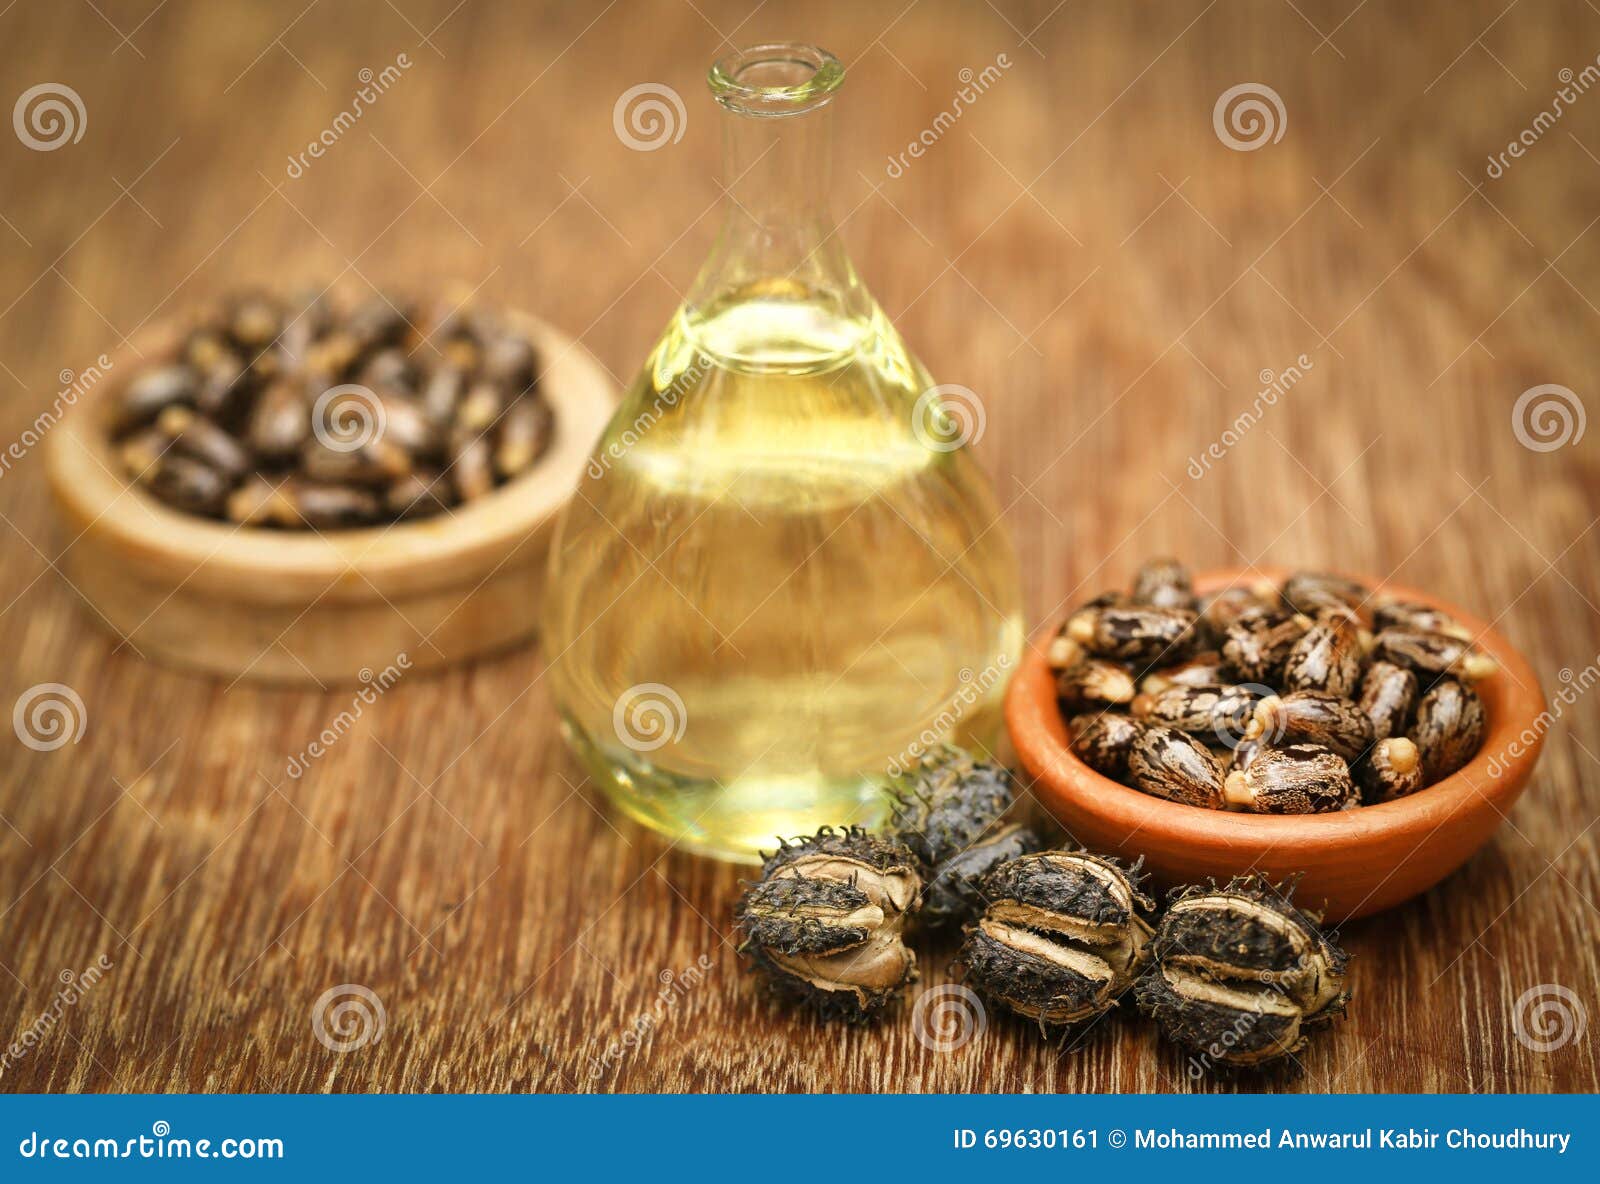 castor beans and oil